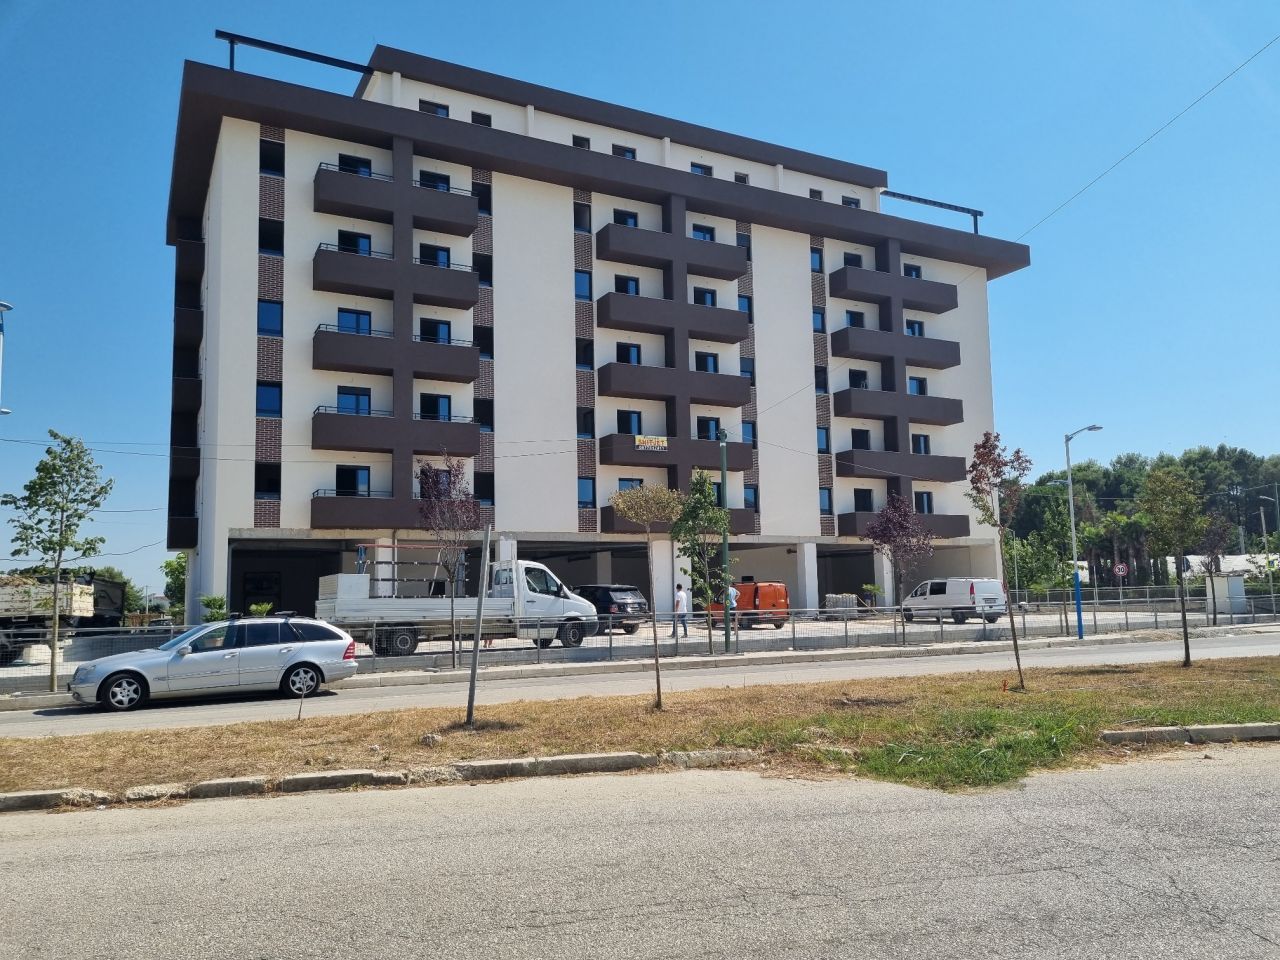 Apartament Per Shitje Ne Mali Robit Golem Durres Albania, Ndodhet Ne Nje Zone Te Qete, Prane Plazhit